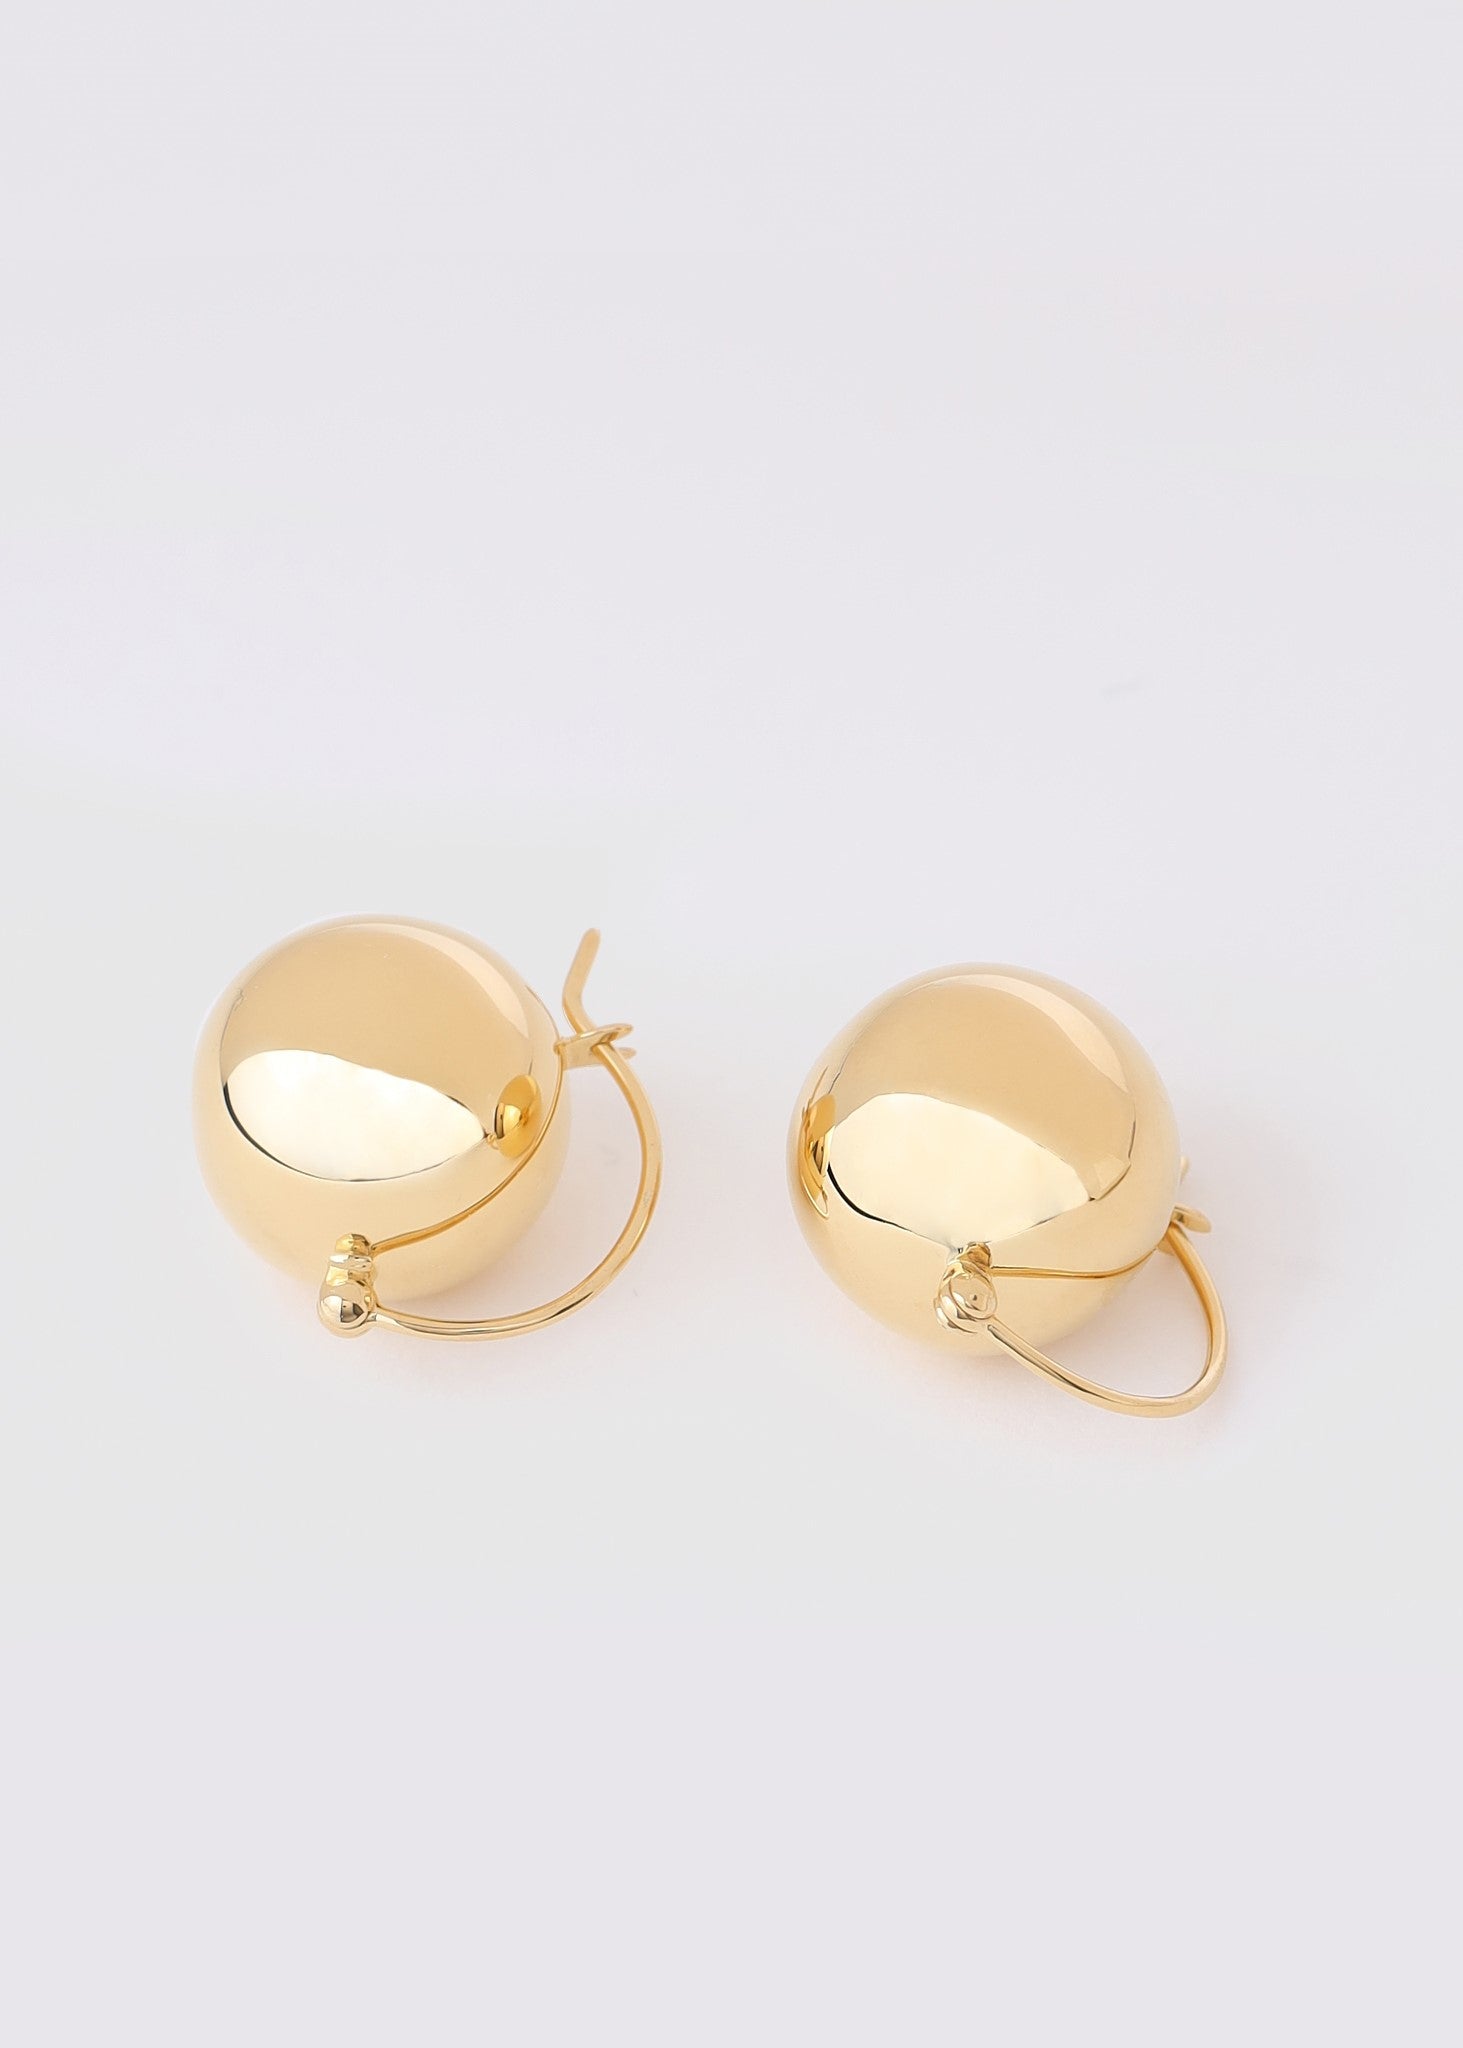 Image of G. Lundgren Womens Shiny Ball Earrings In 18Kt Gold-Plated Brass